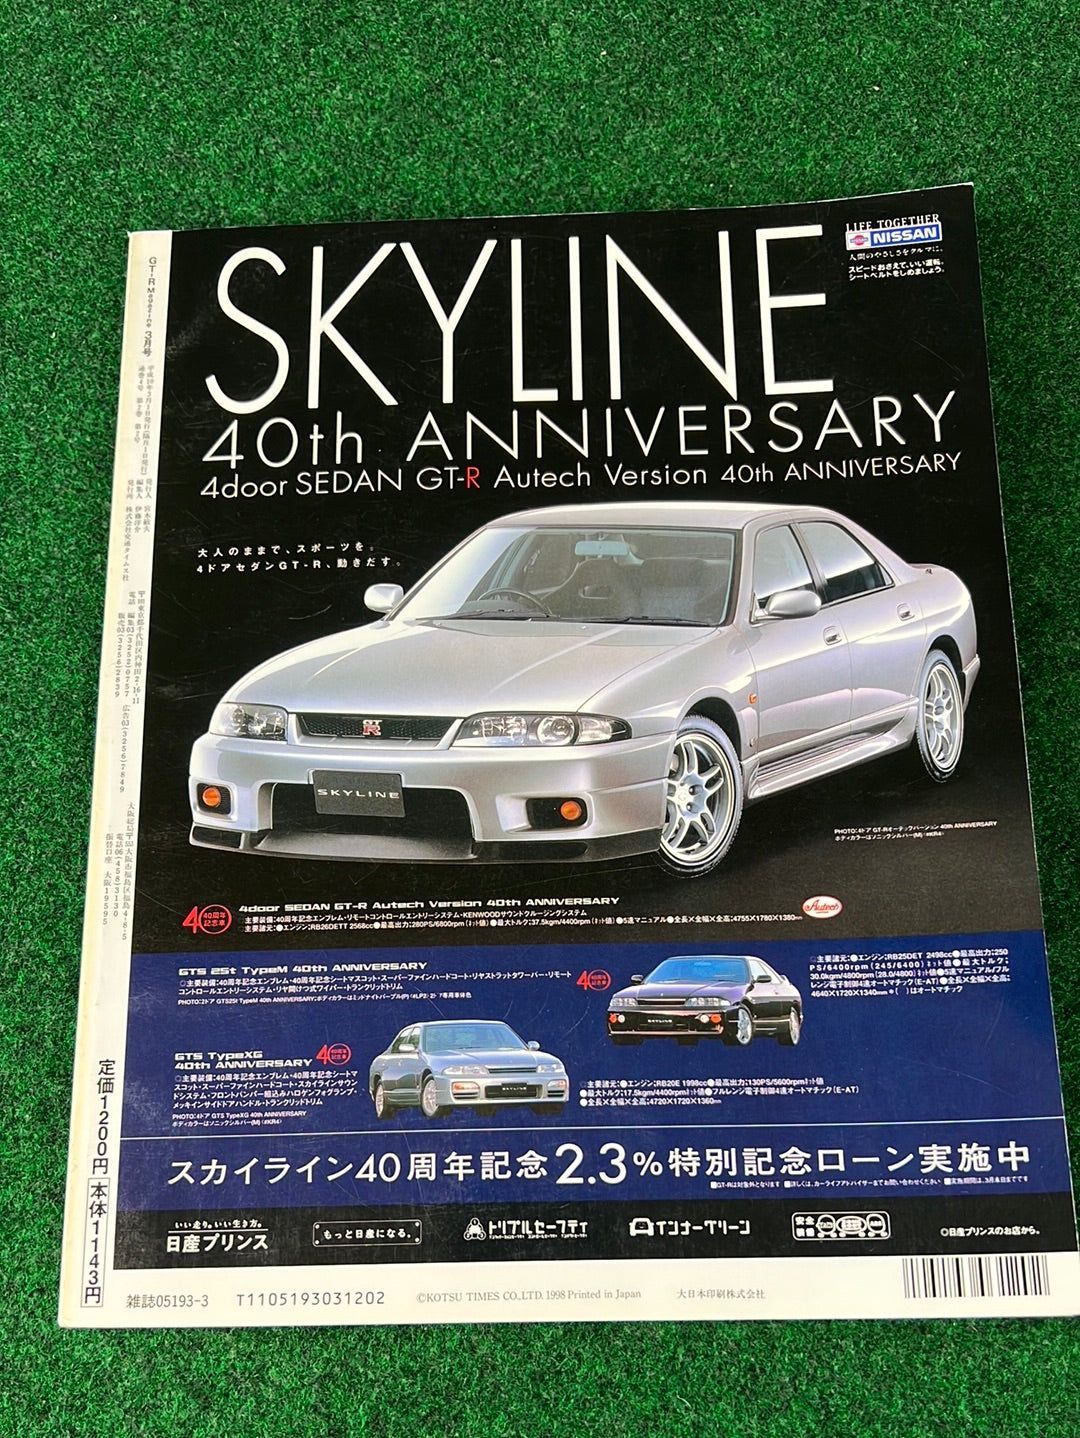 GT-R Magazine - 1998 Vol. 019